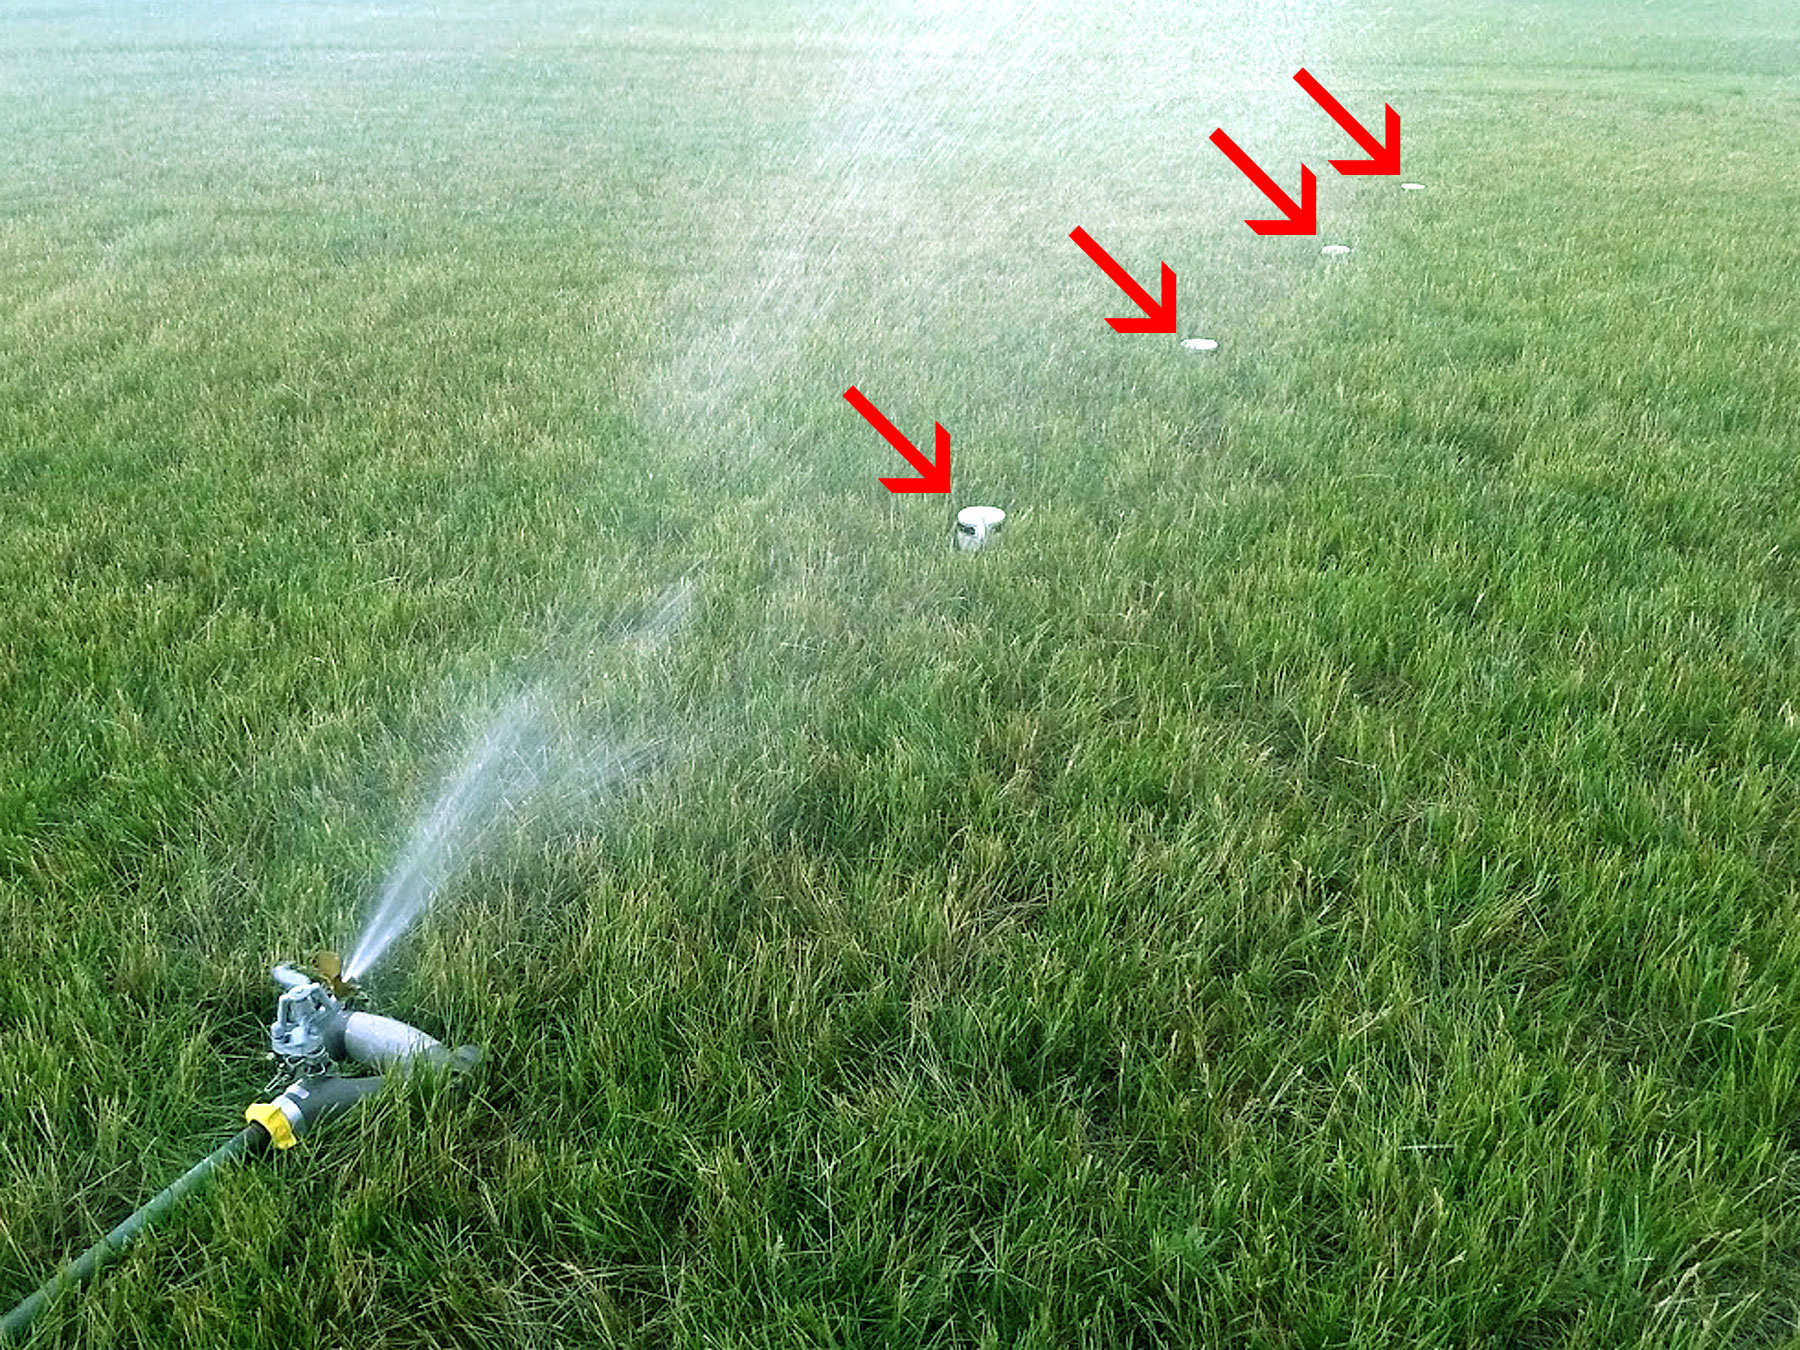 Lawn sprinkler measurement